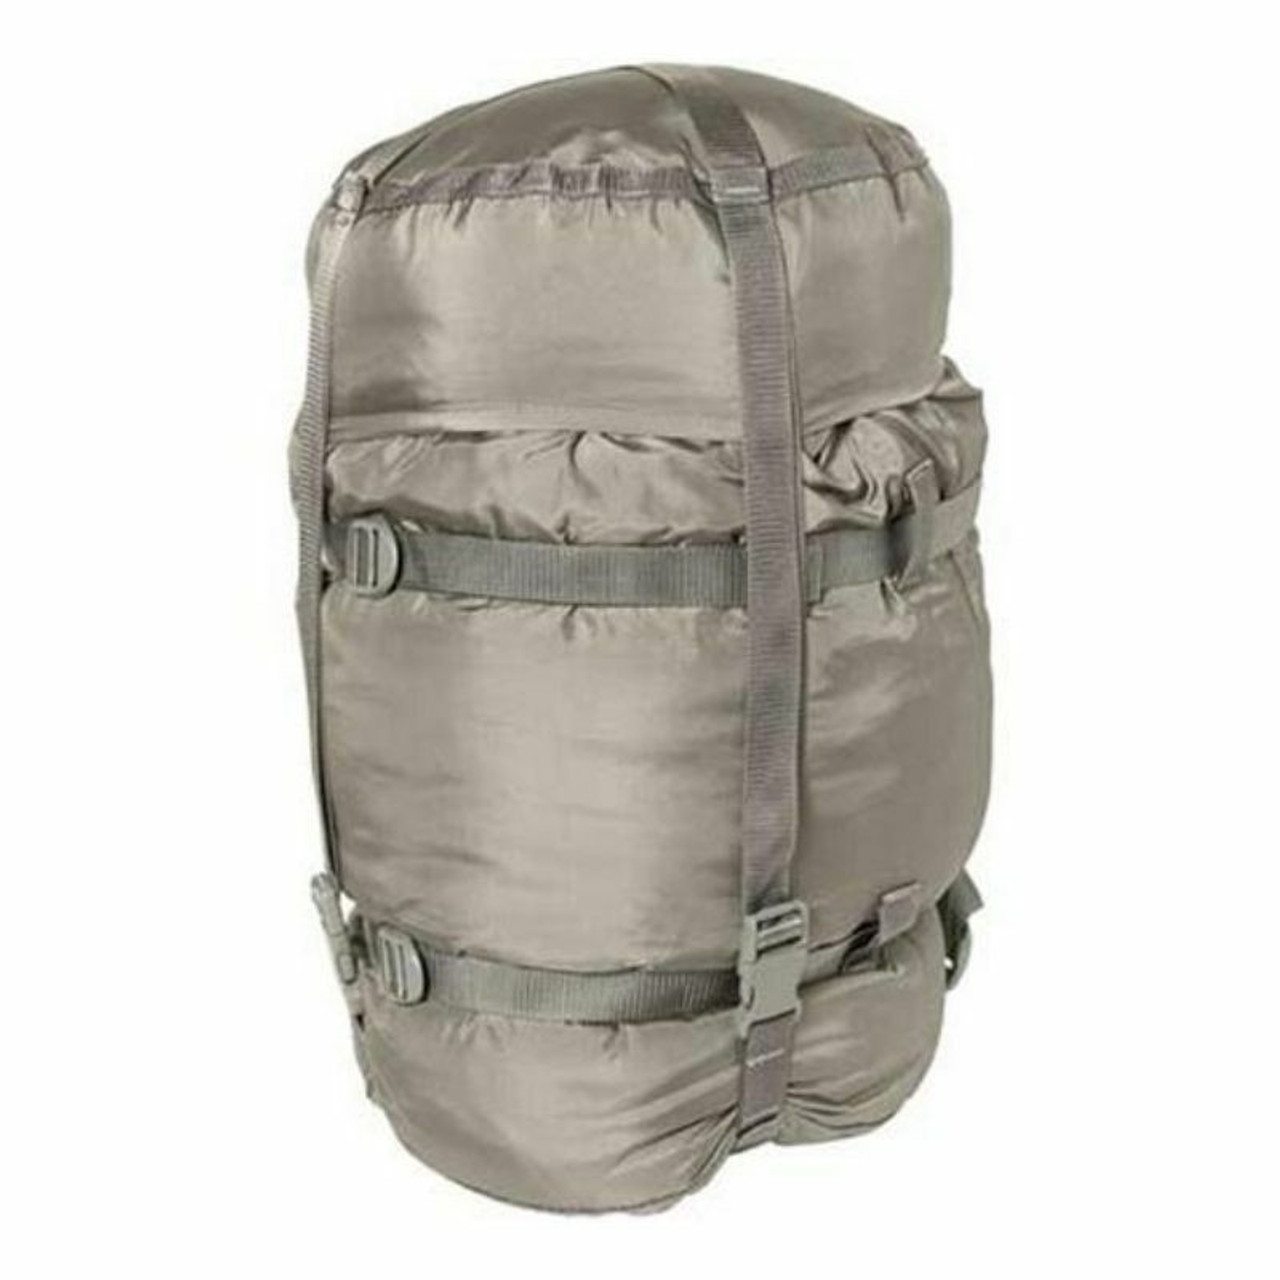 U.S. Issue ACU Modular Sleeping Bag System | Army Navy Outdoors